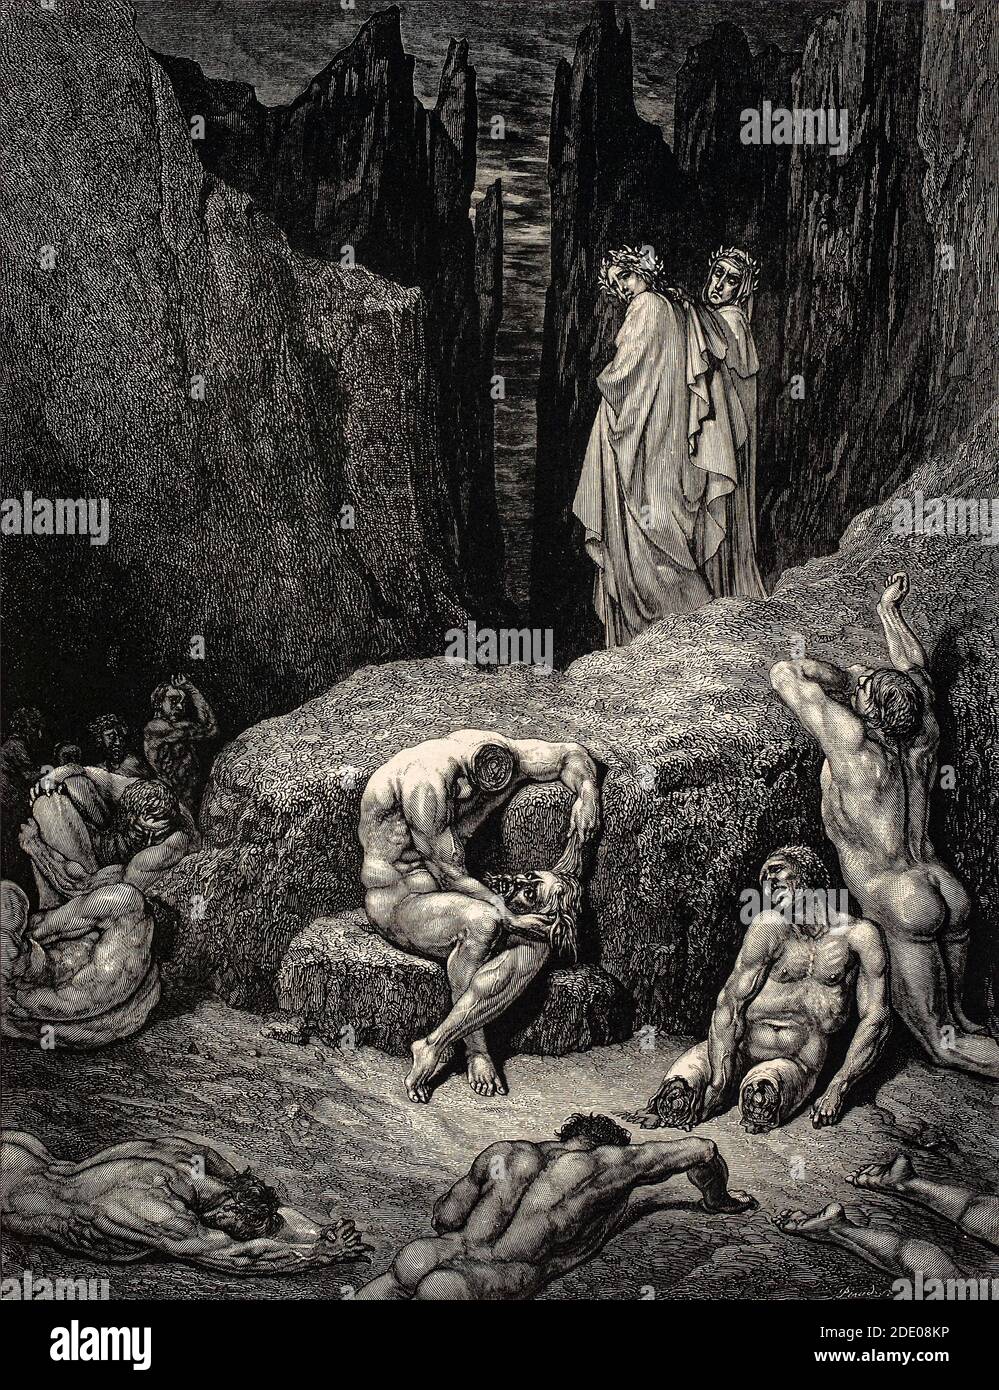 Dante Divina Commedia - Infierno - XXIX Canto - Virgil Reproches Dante -VIII Círculo - ilustración de Gustave Dorè Foto de stock